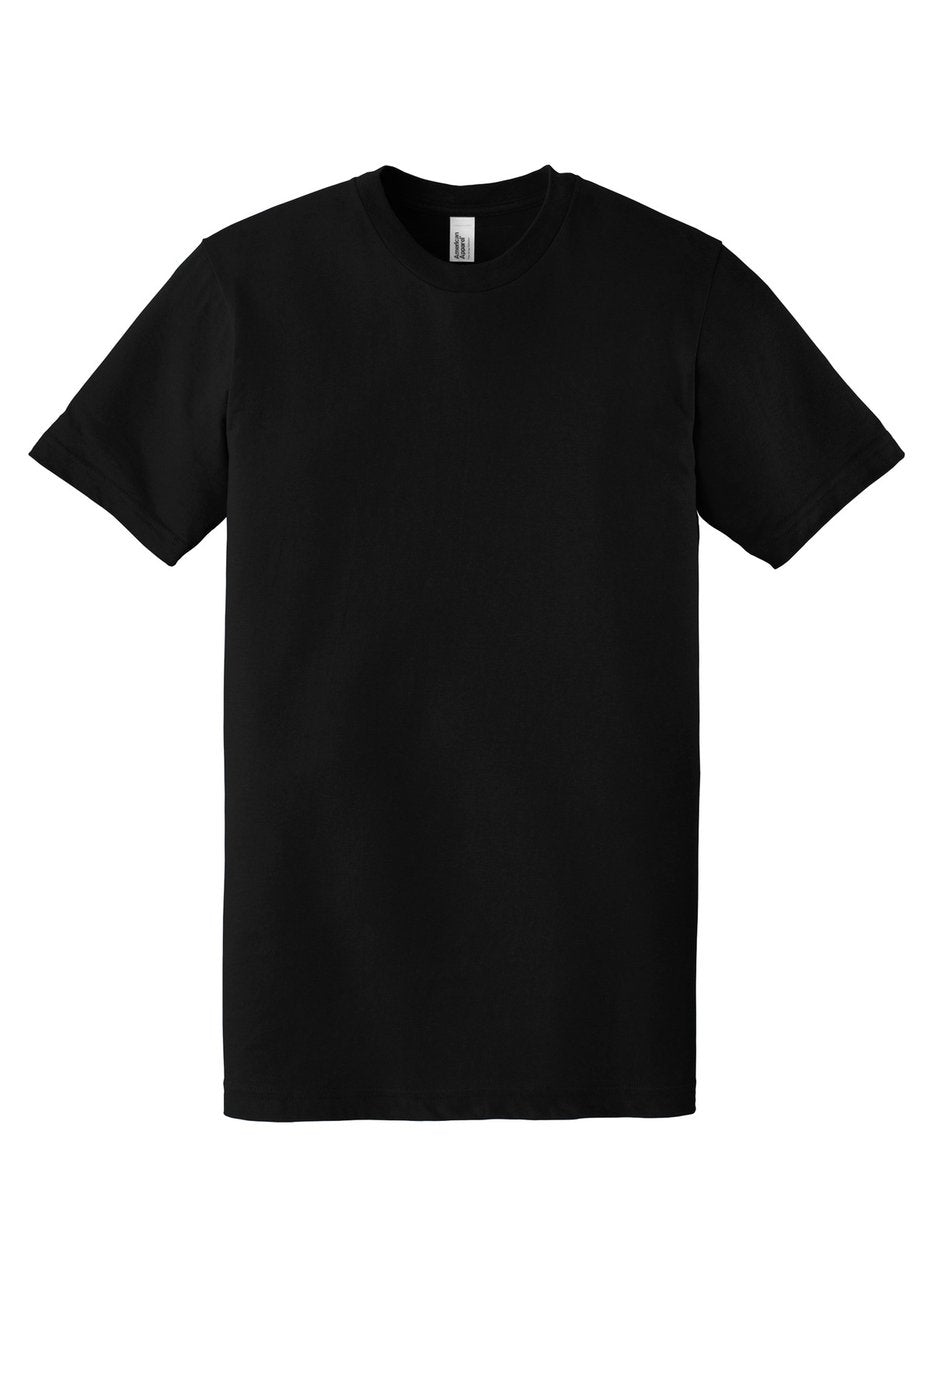 Black S&S American Apparel Unisex Fine Jersey T-Shirt